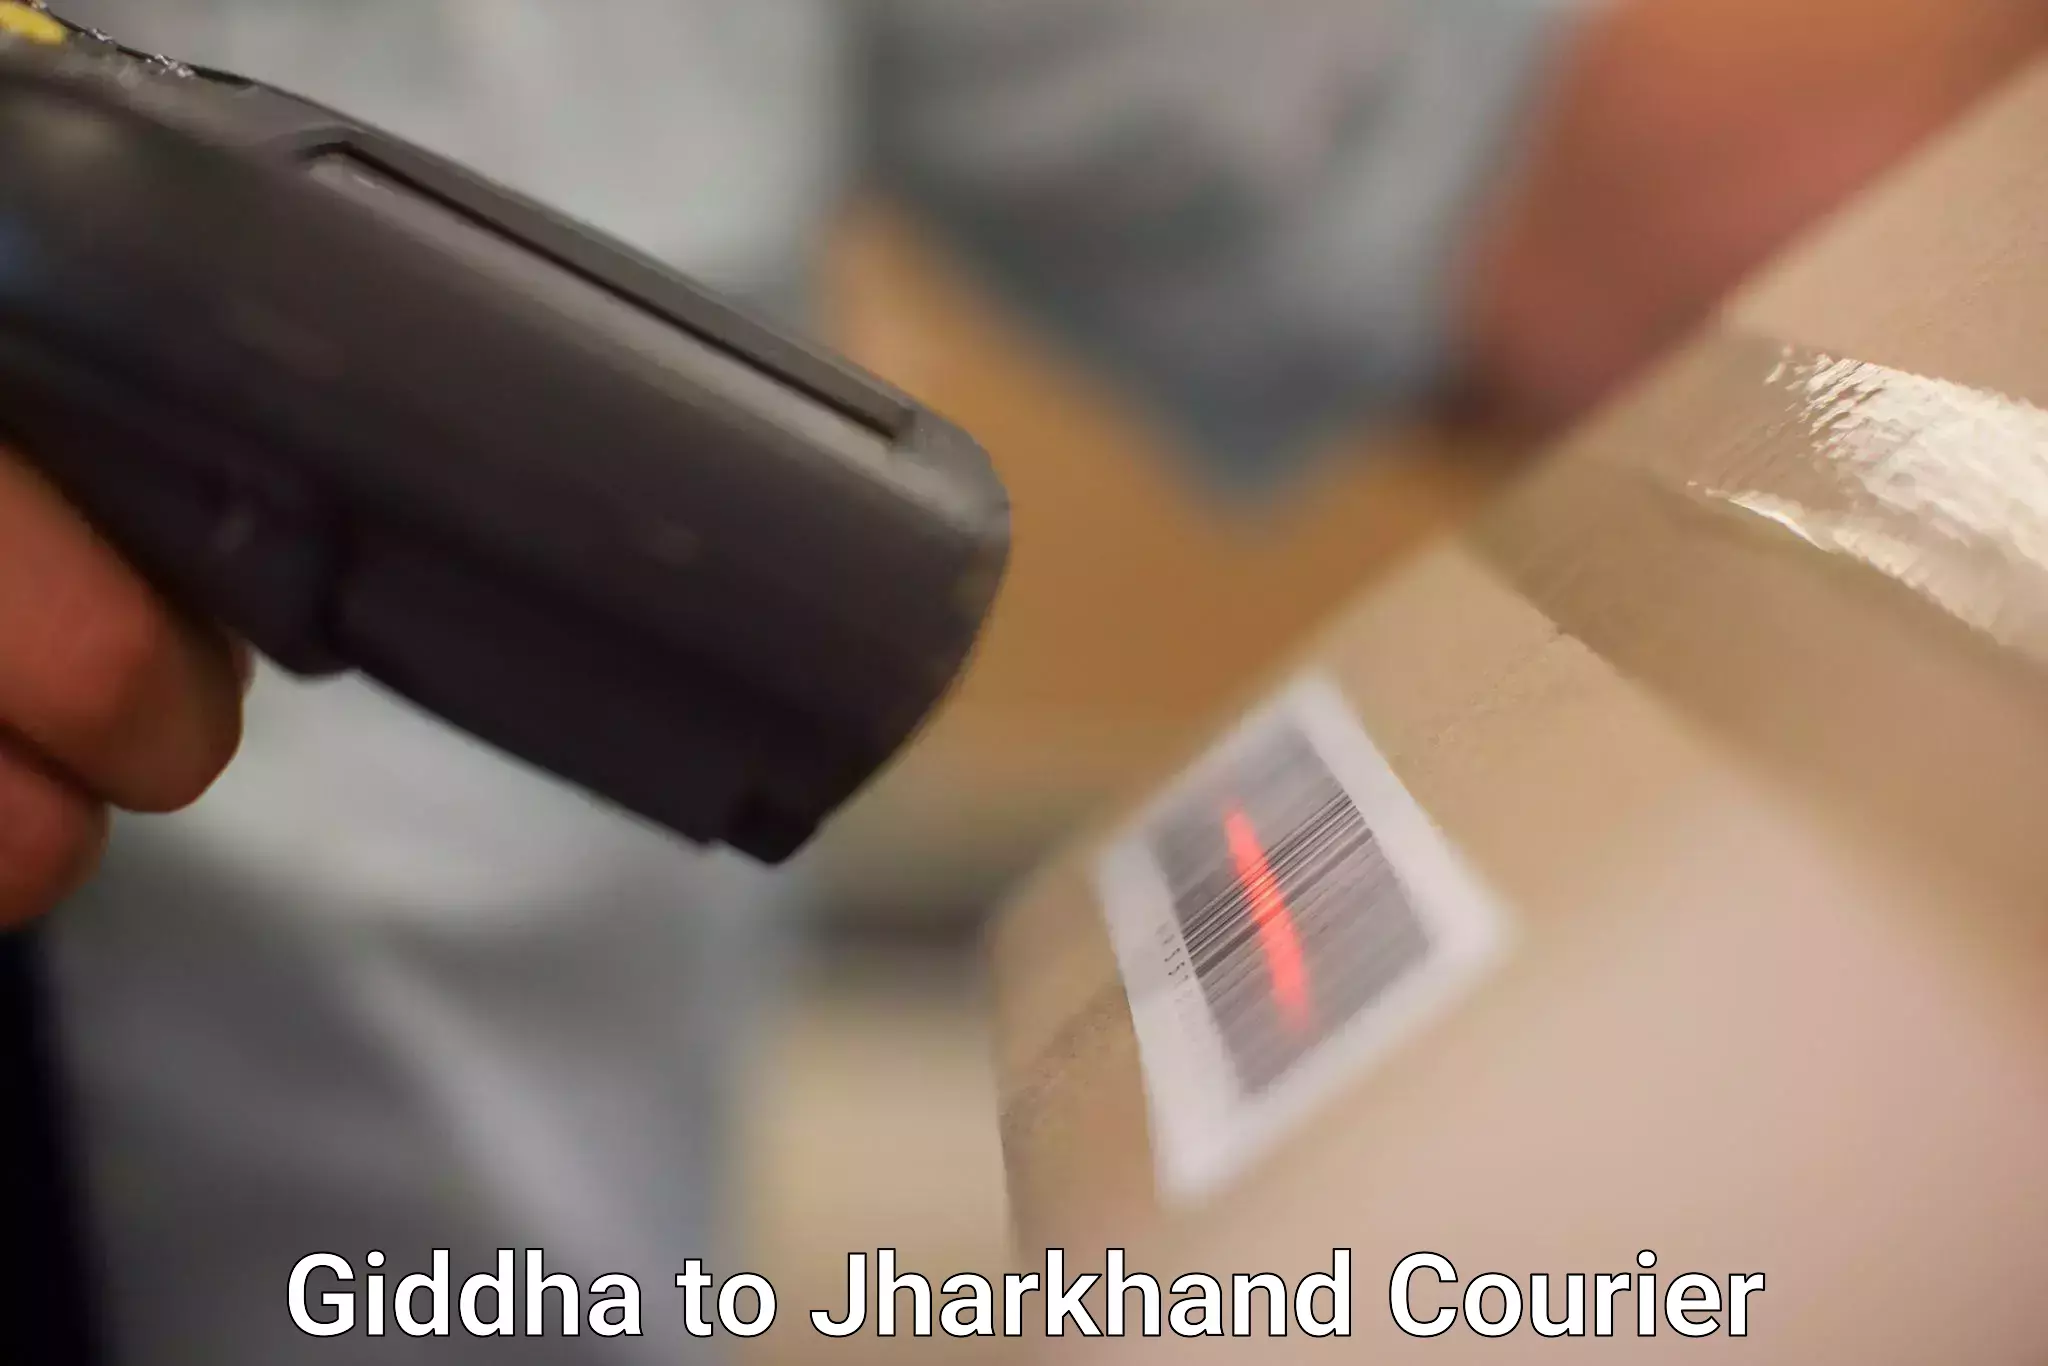 Efficient logistics management in Giddha to Dhanbad